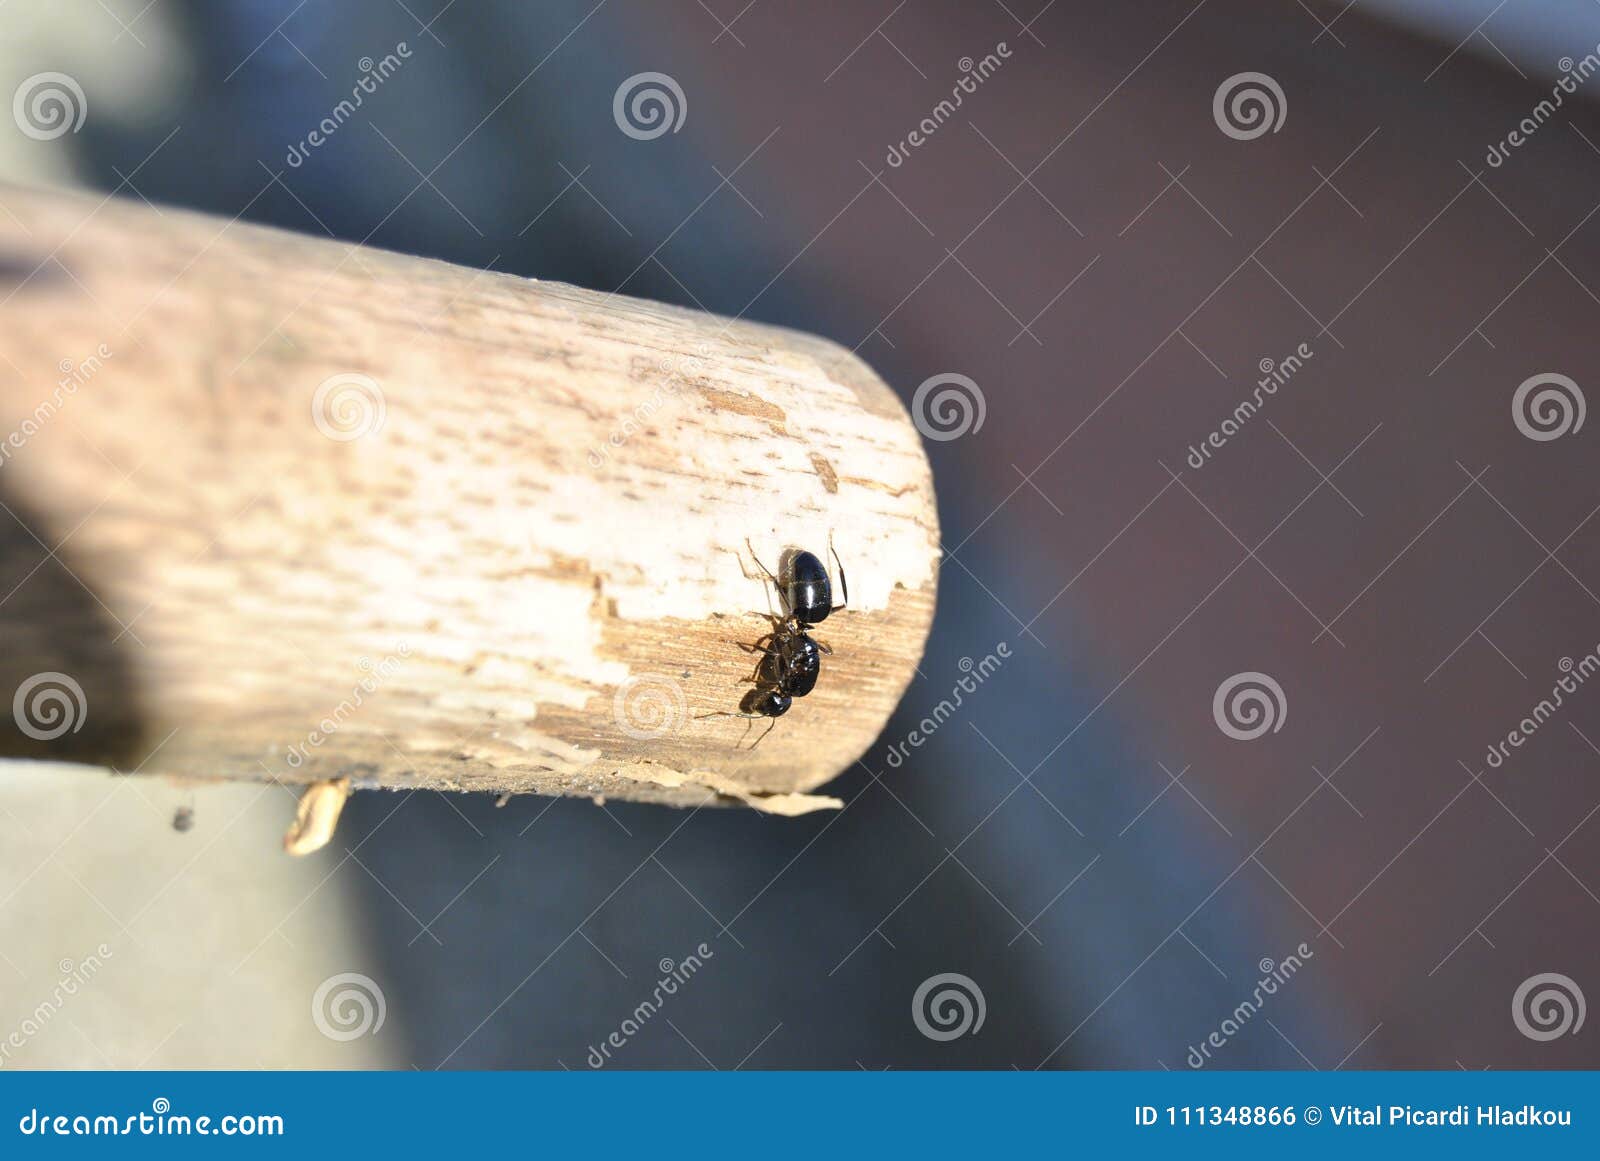 climbing ant on wood stick